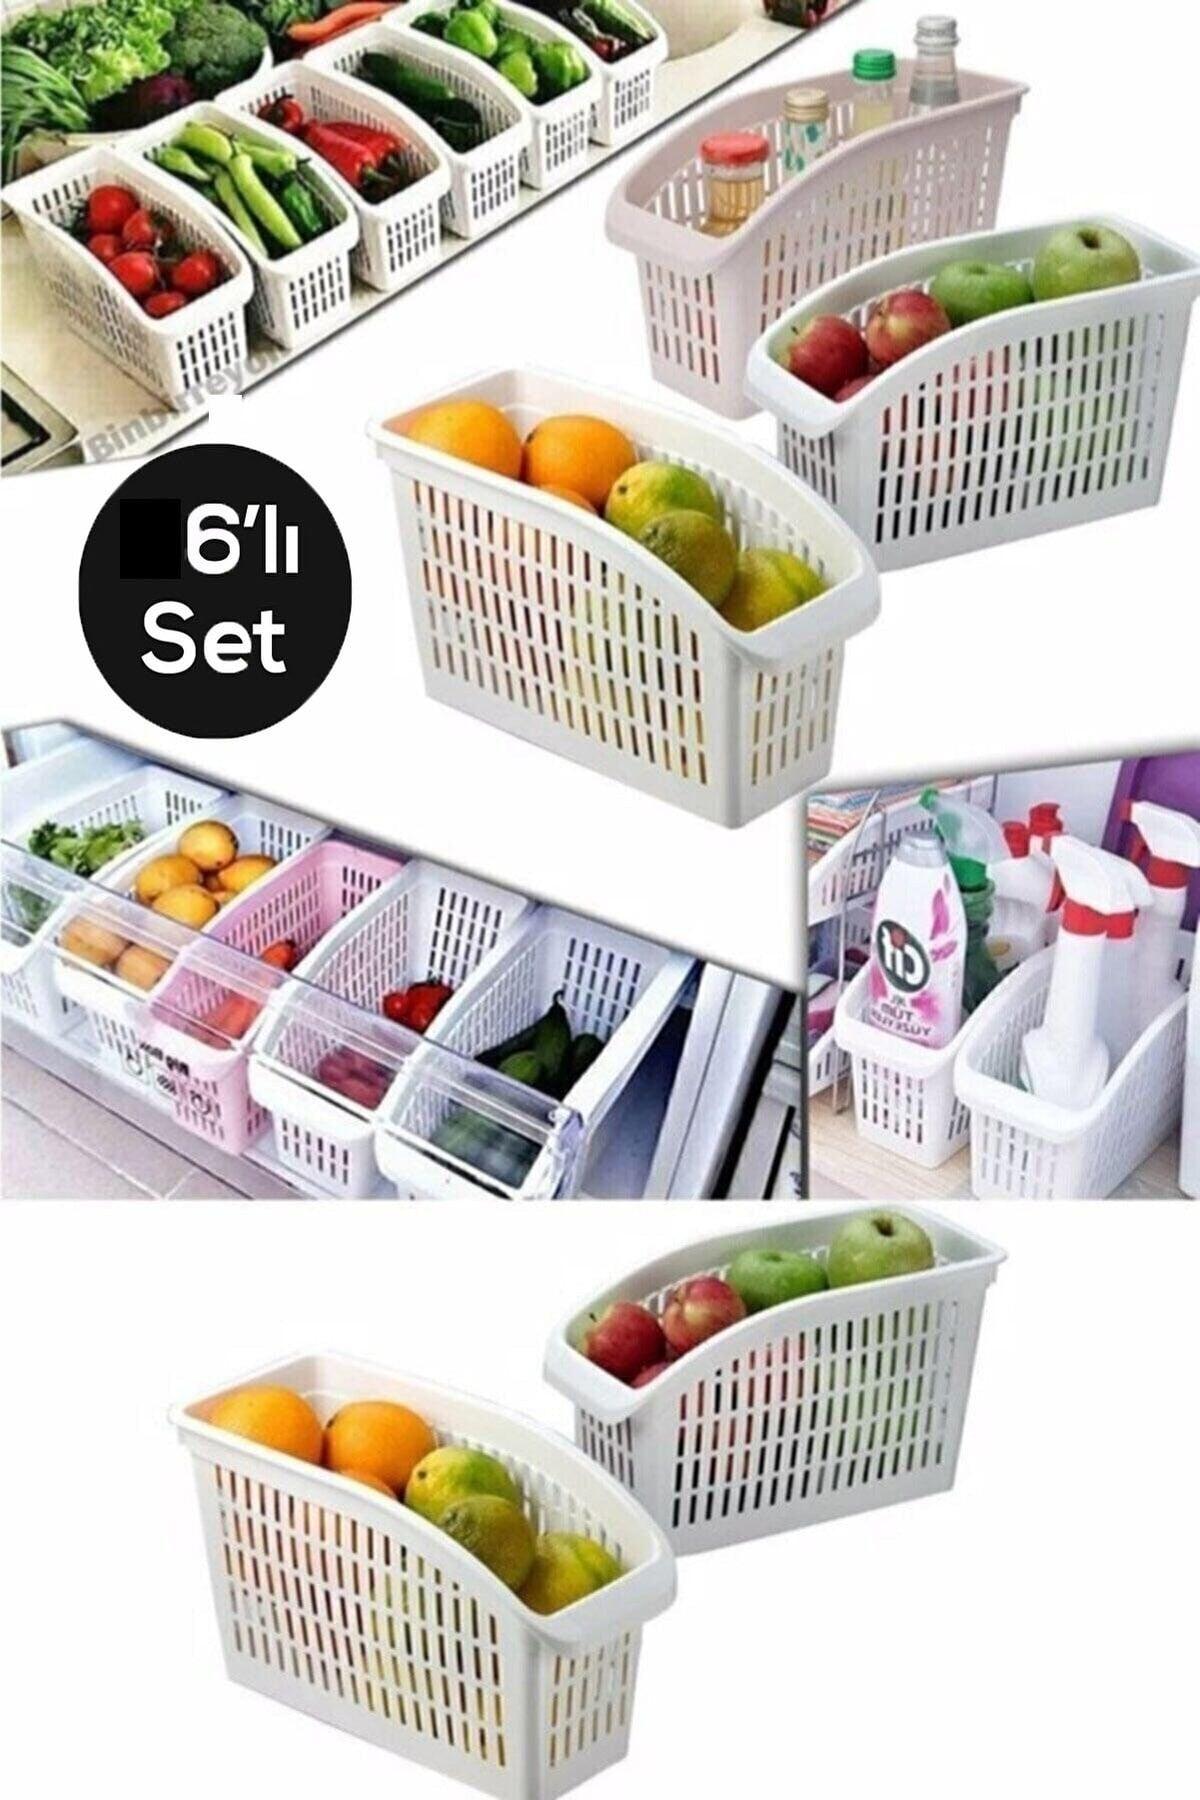 Pcs Refrigerator Organizer Vegetable Fruit Basket Kitchen Bathroom Under Counter Organizer - Swordslife